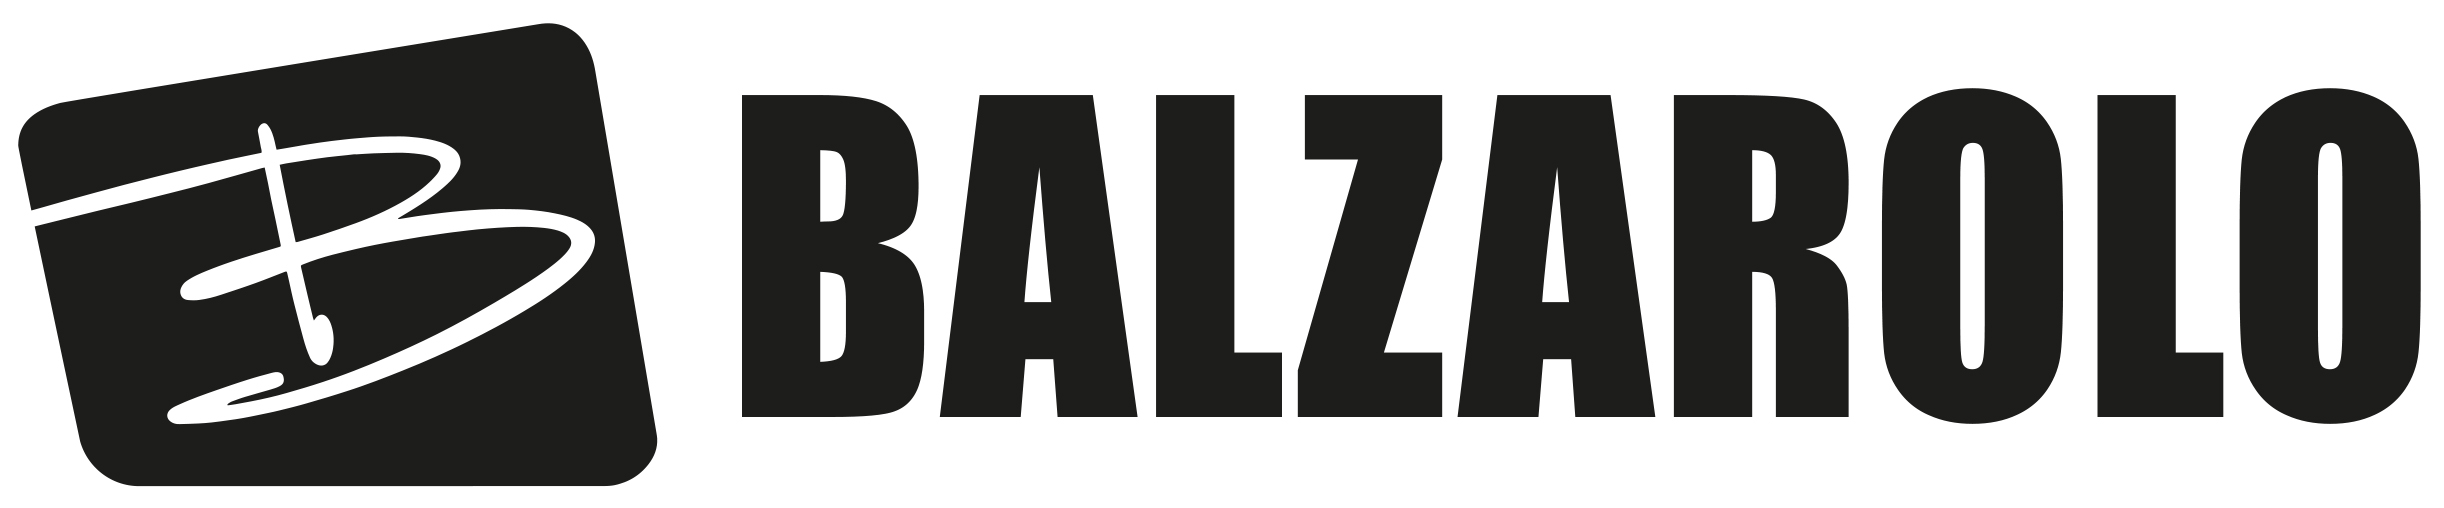 Logo Balzarolo classic